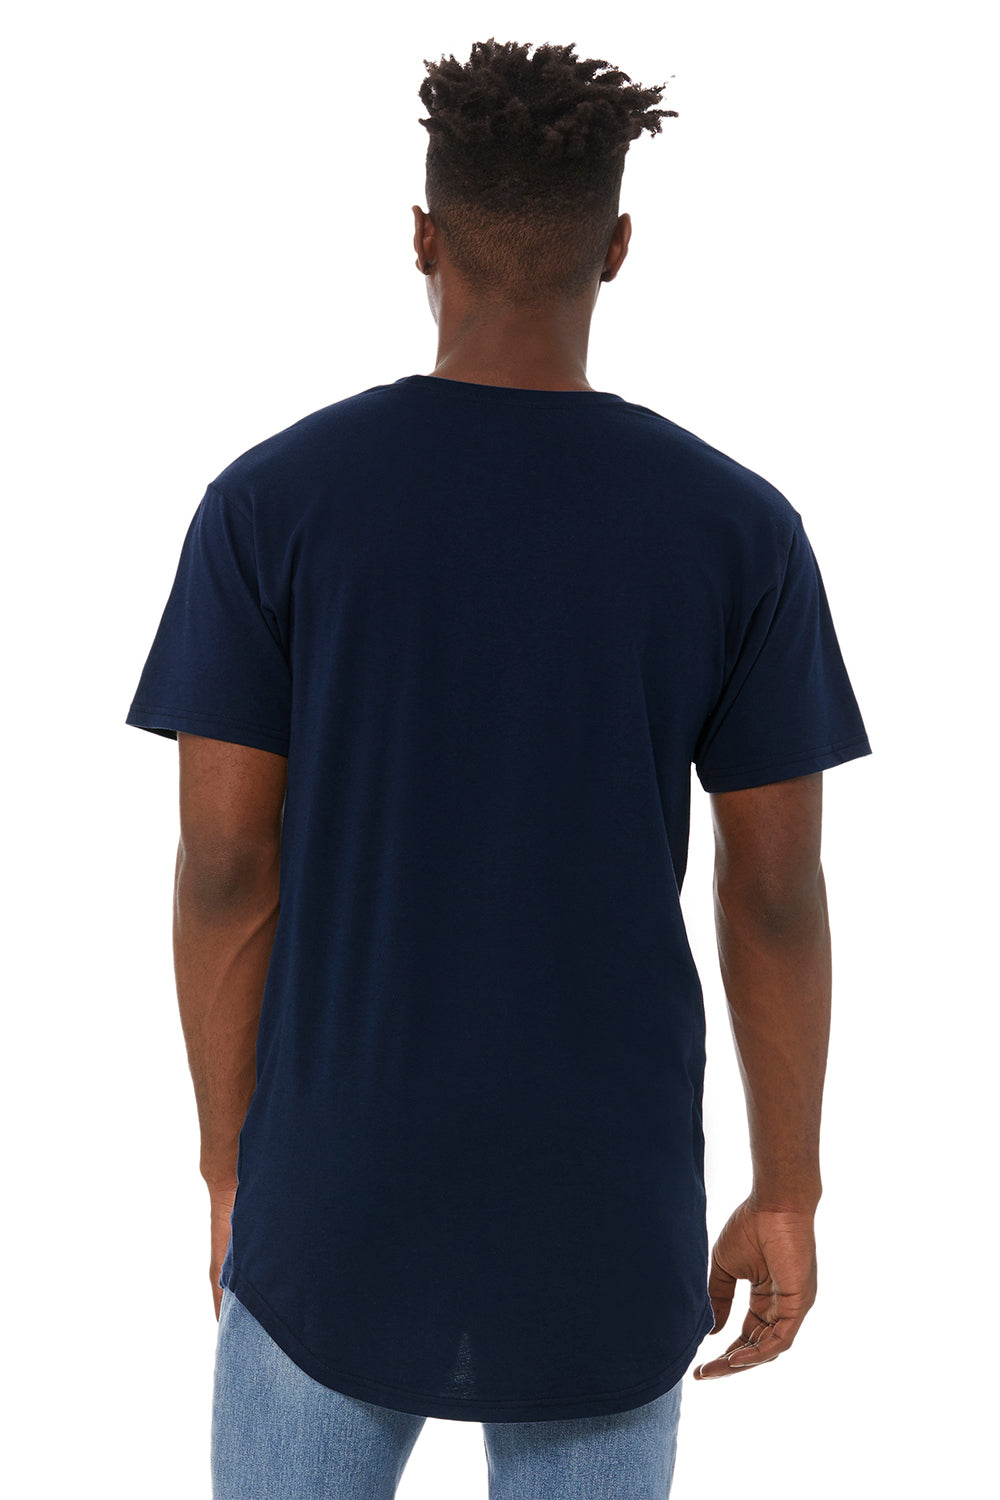 Bella + Canvas 3006 Mens Long Body Urban Short Sleeve Crewneck T-Shirt Navy Blue Model Back